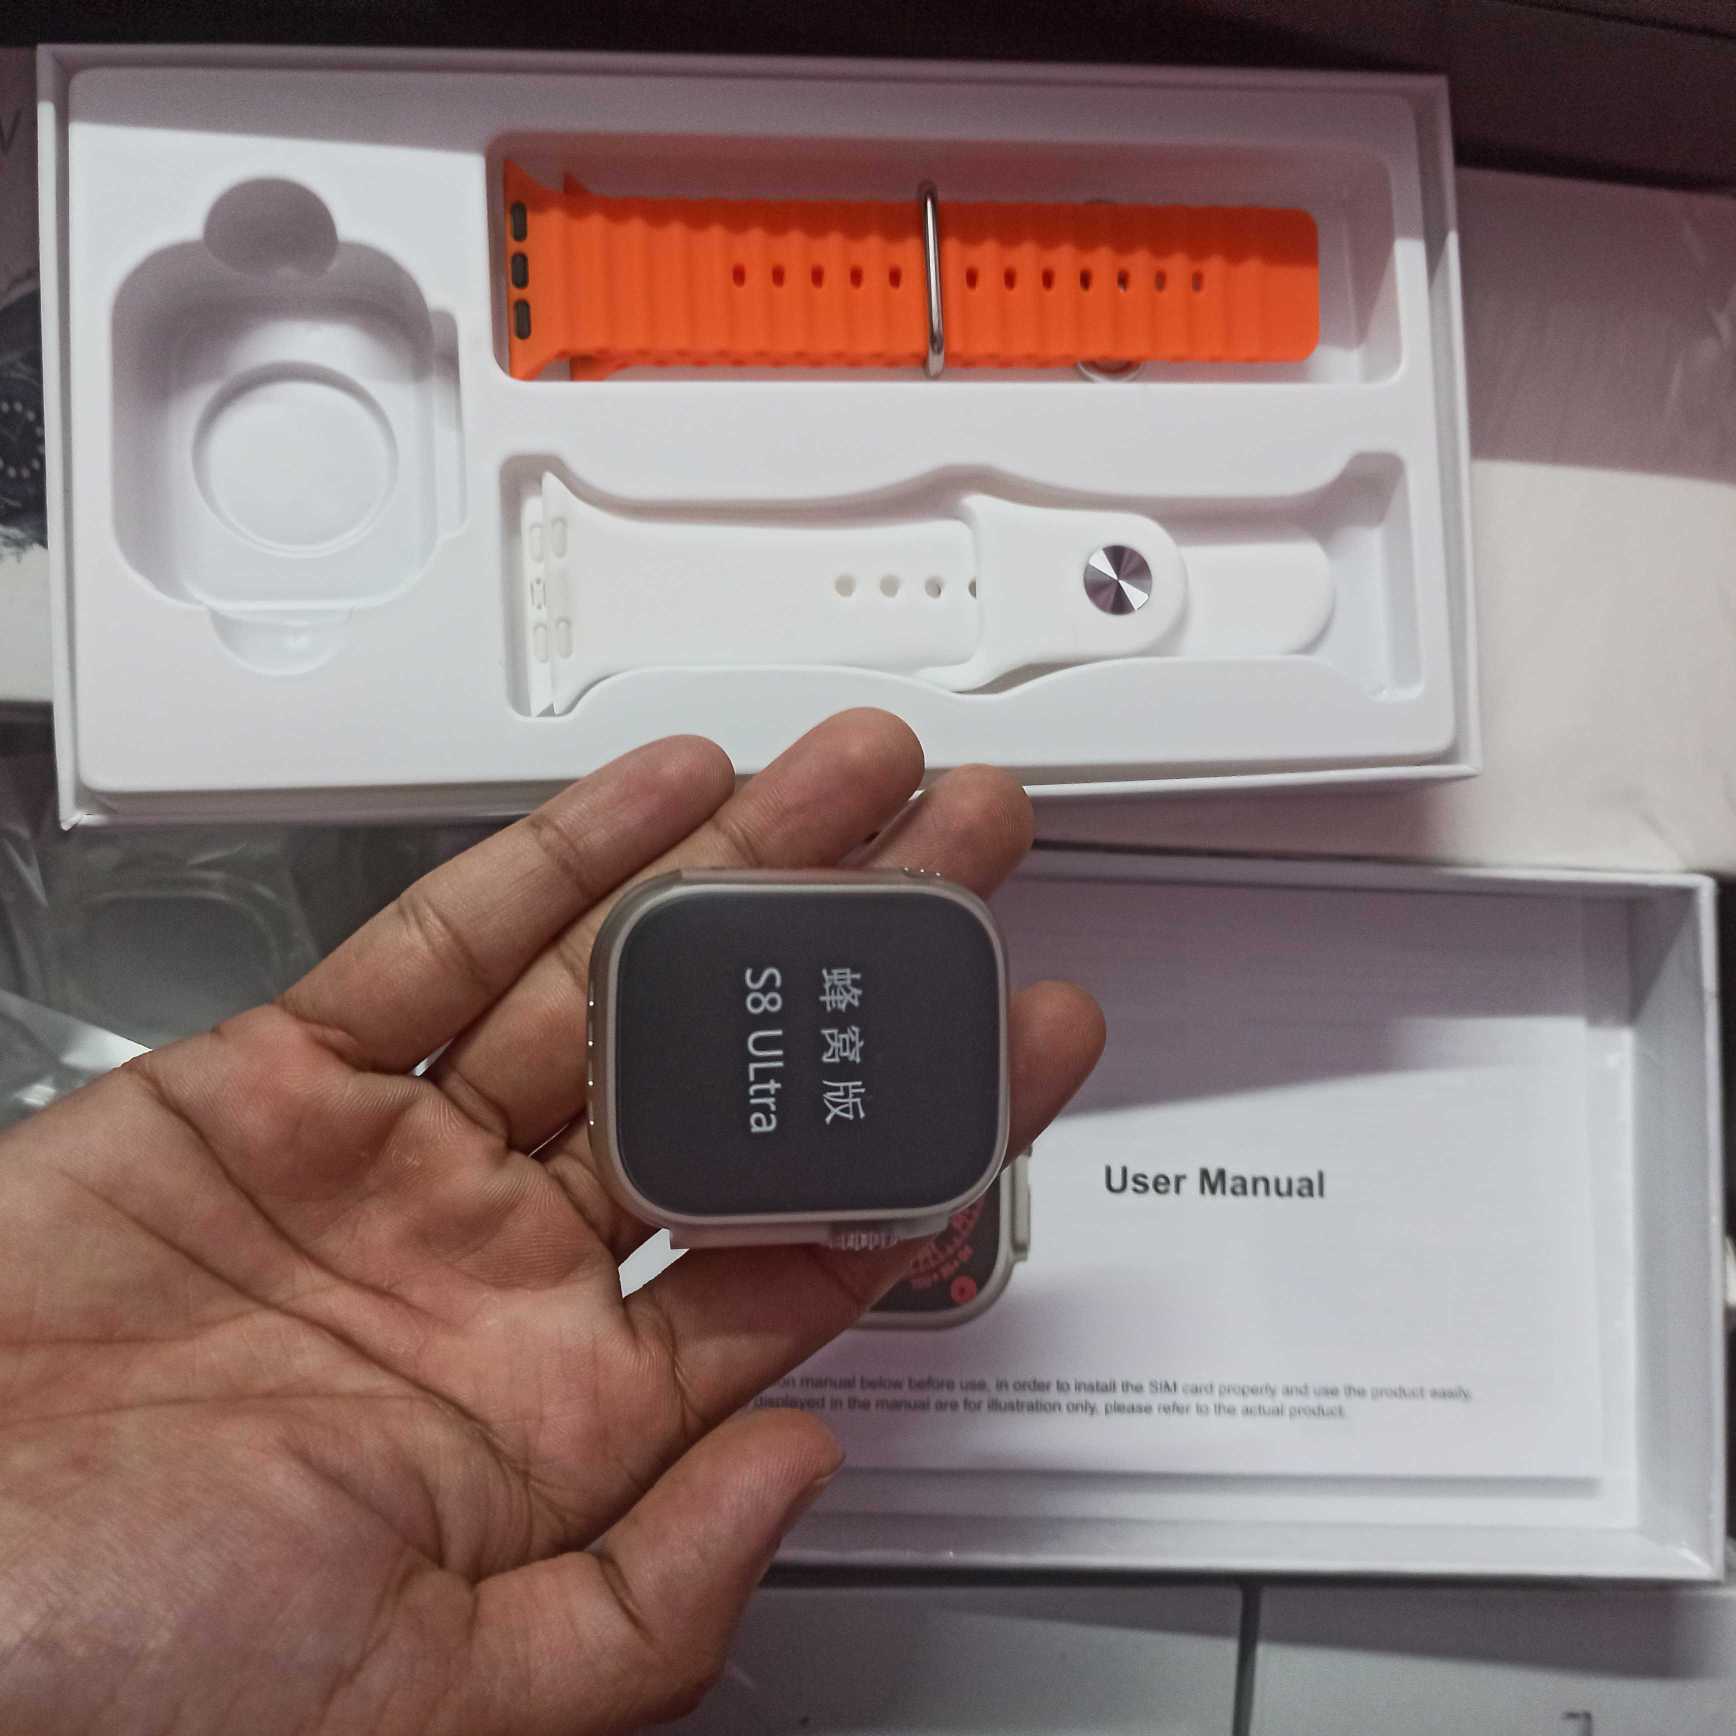 S8 Ultra 4g Smartwatch